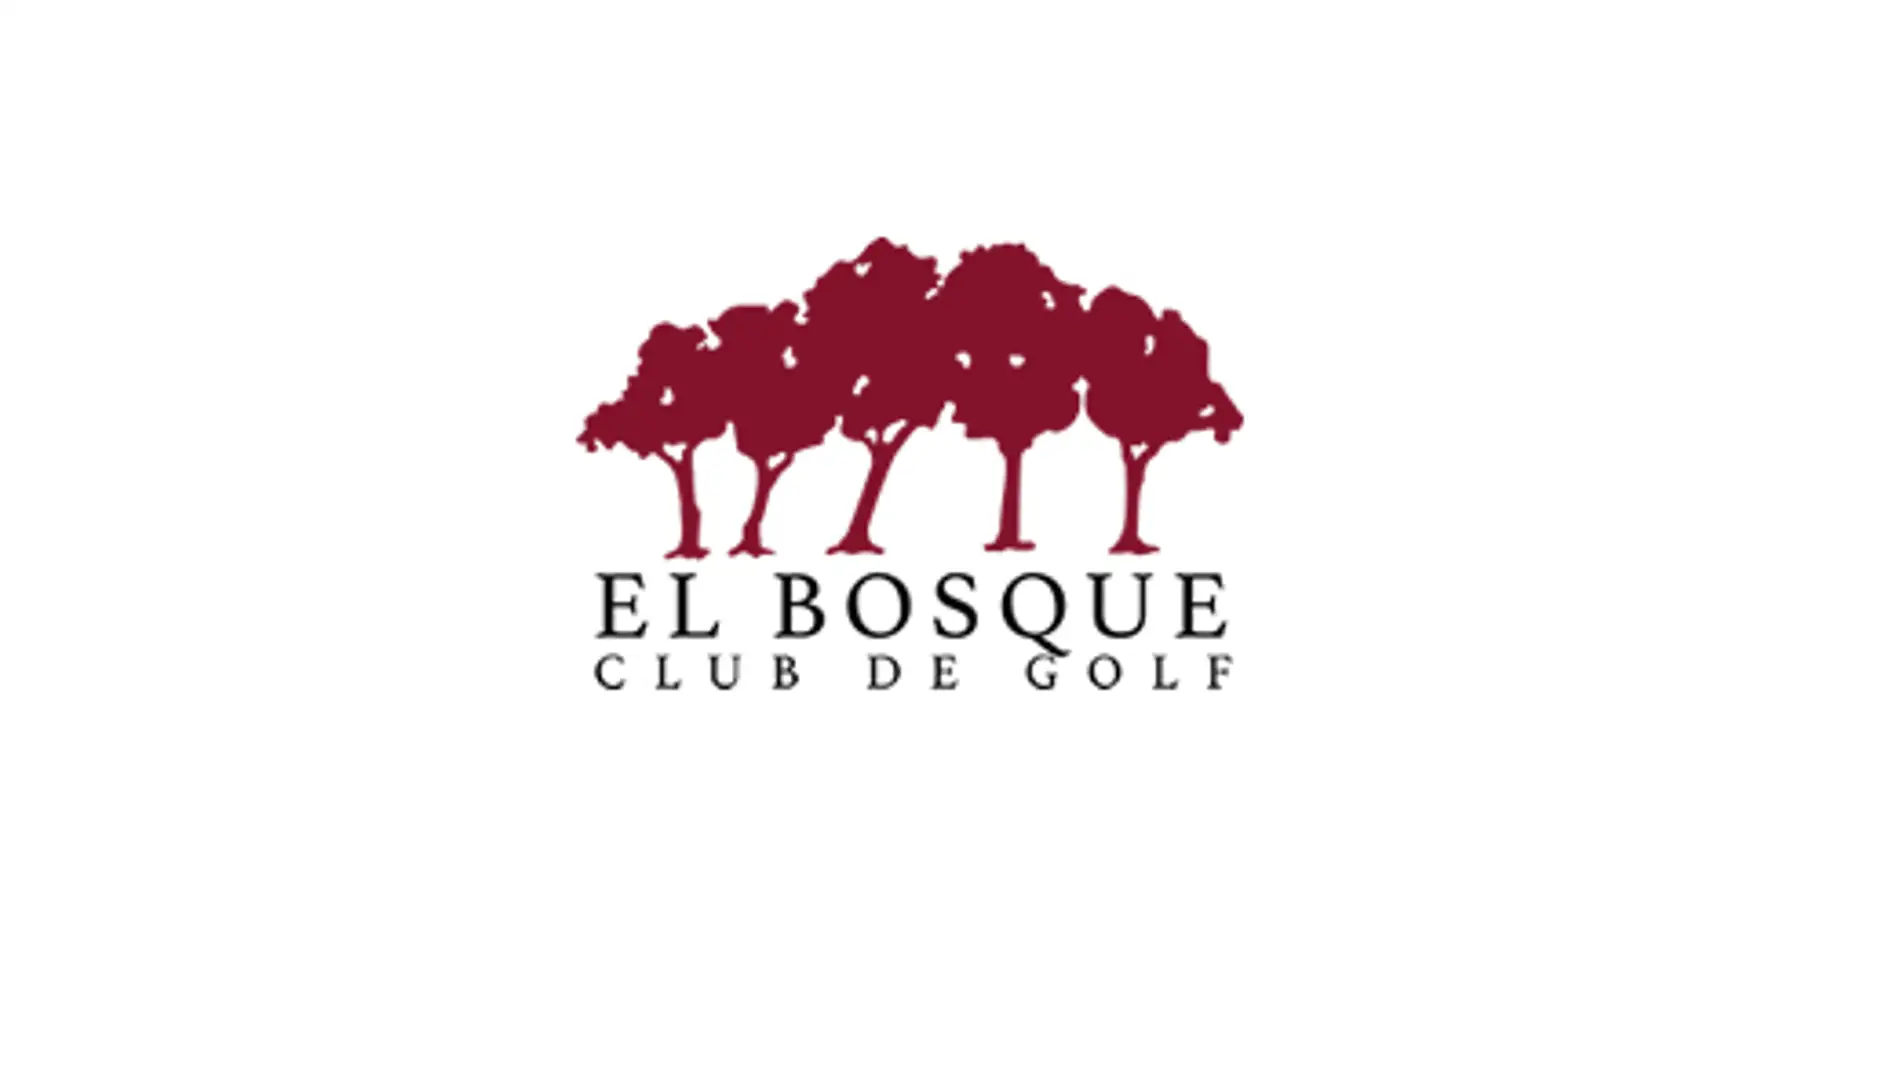 EL BOSQUE CLUB DE GOLF